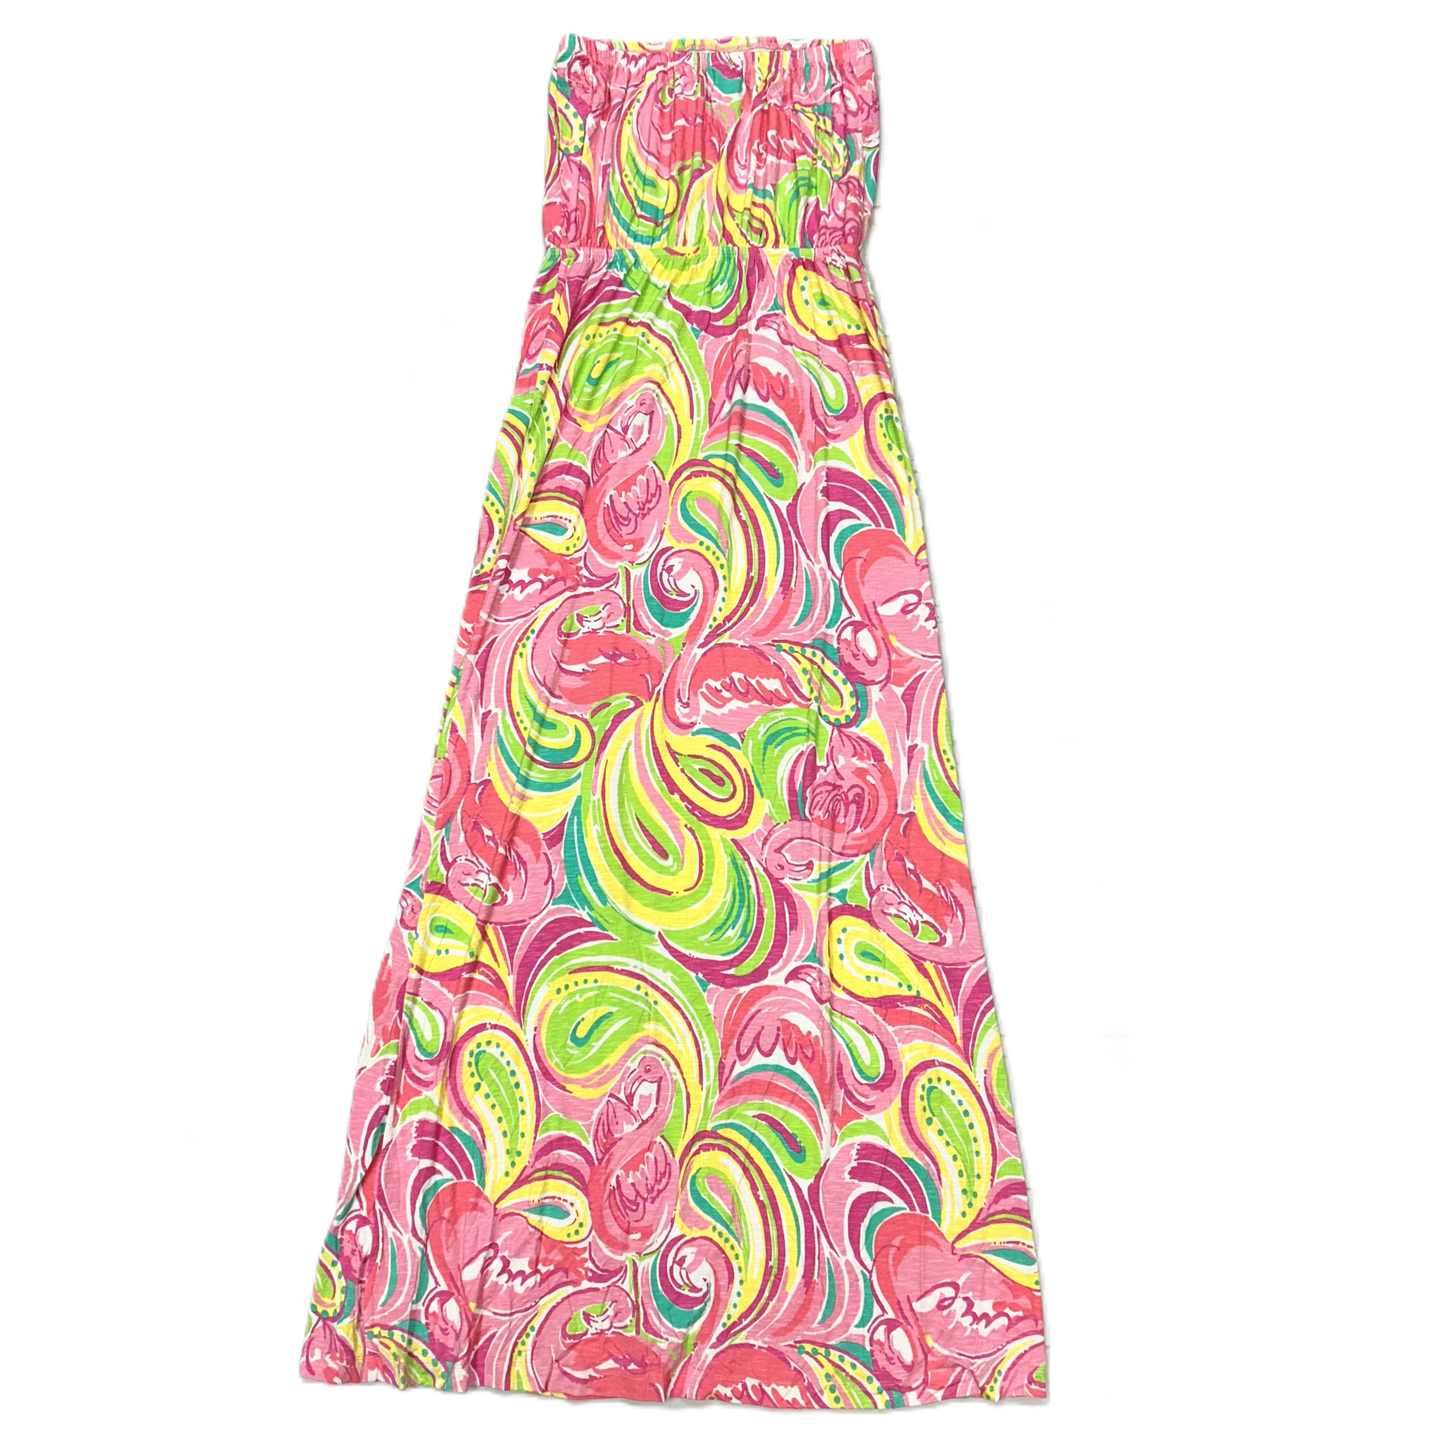 Pinkgreen Dress Designer By Lilly Pulitzer, Size: M